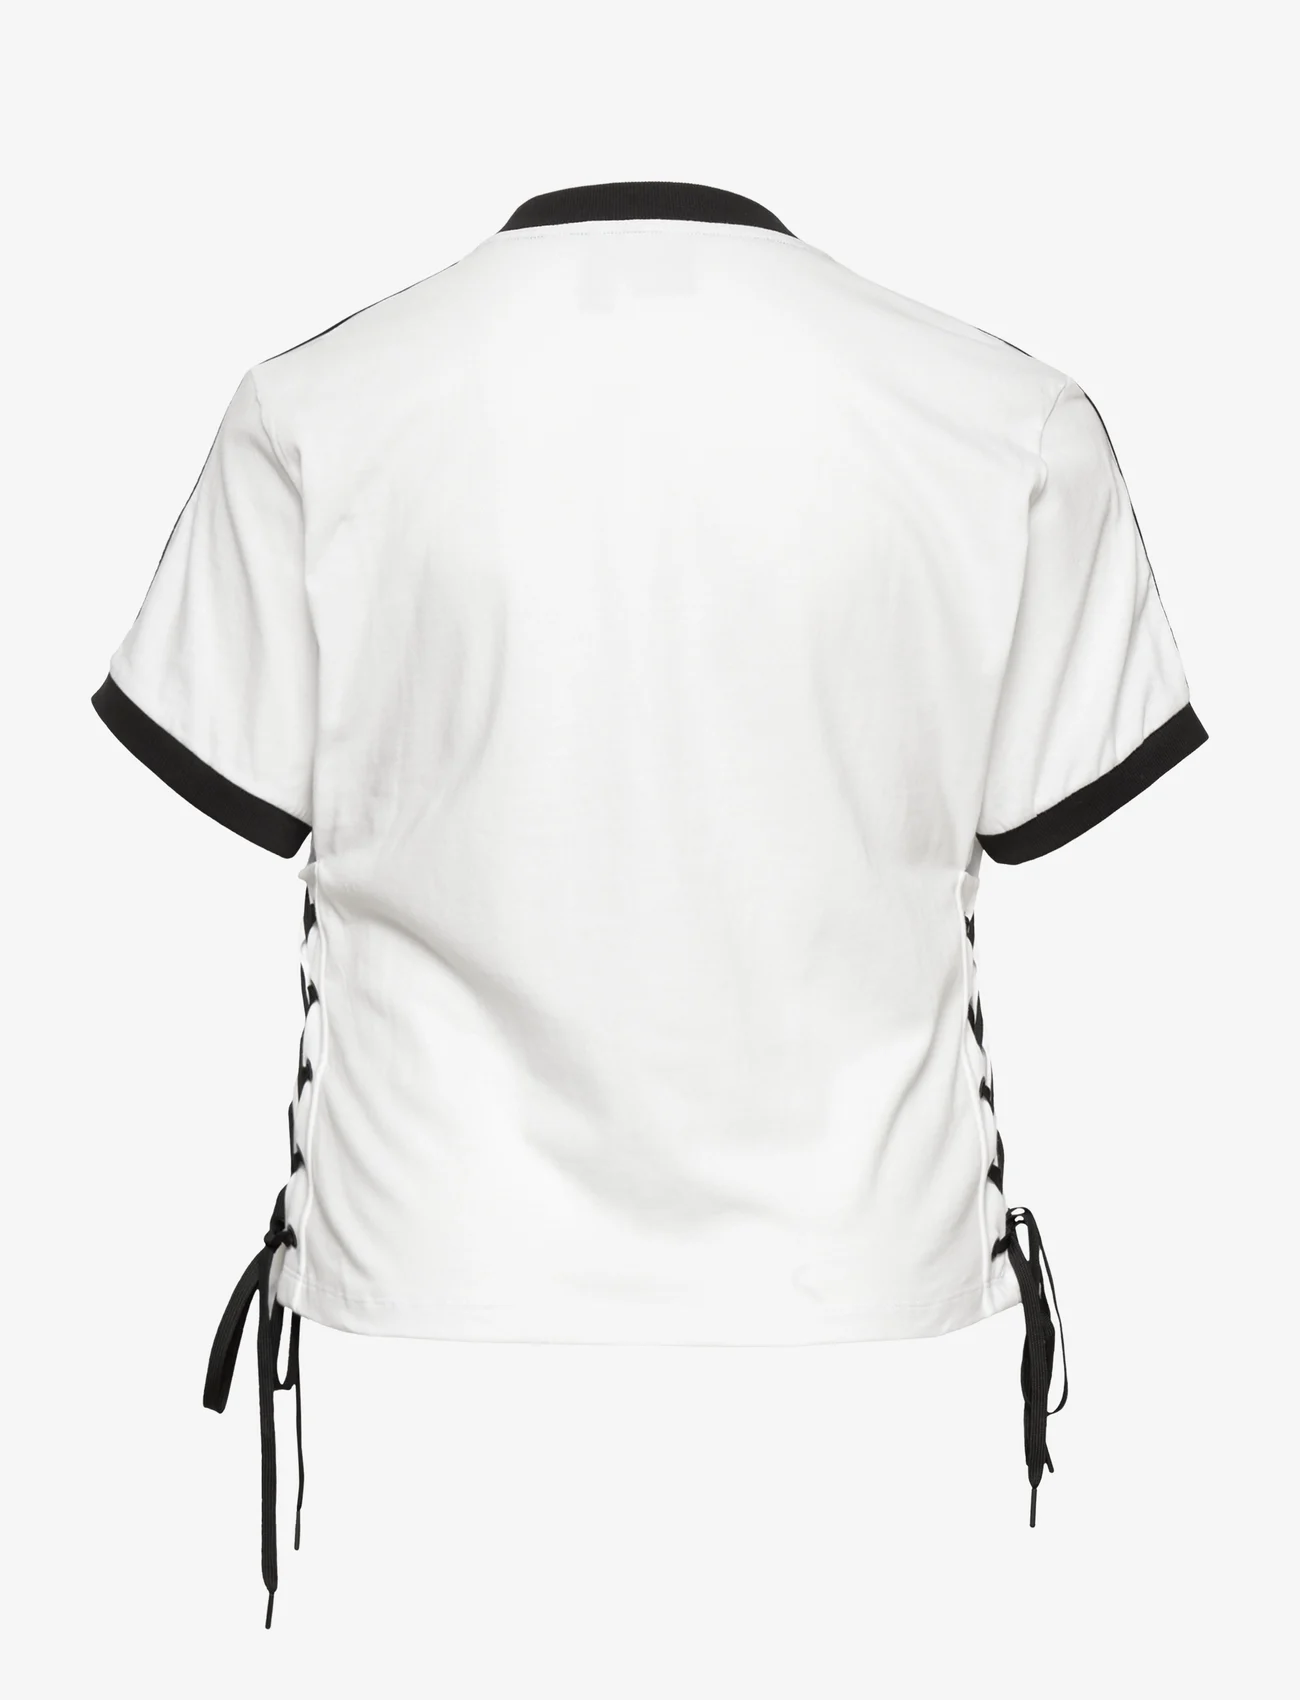 adidas Originals - Always Original Laced T-Shirt (Plus Size) - t-shirts - white - 1